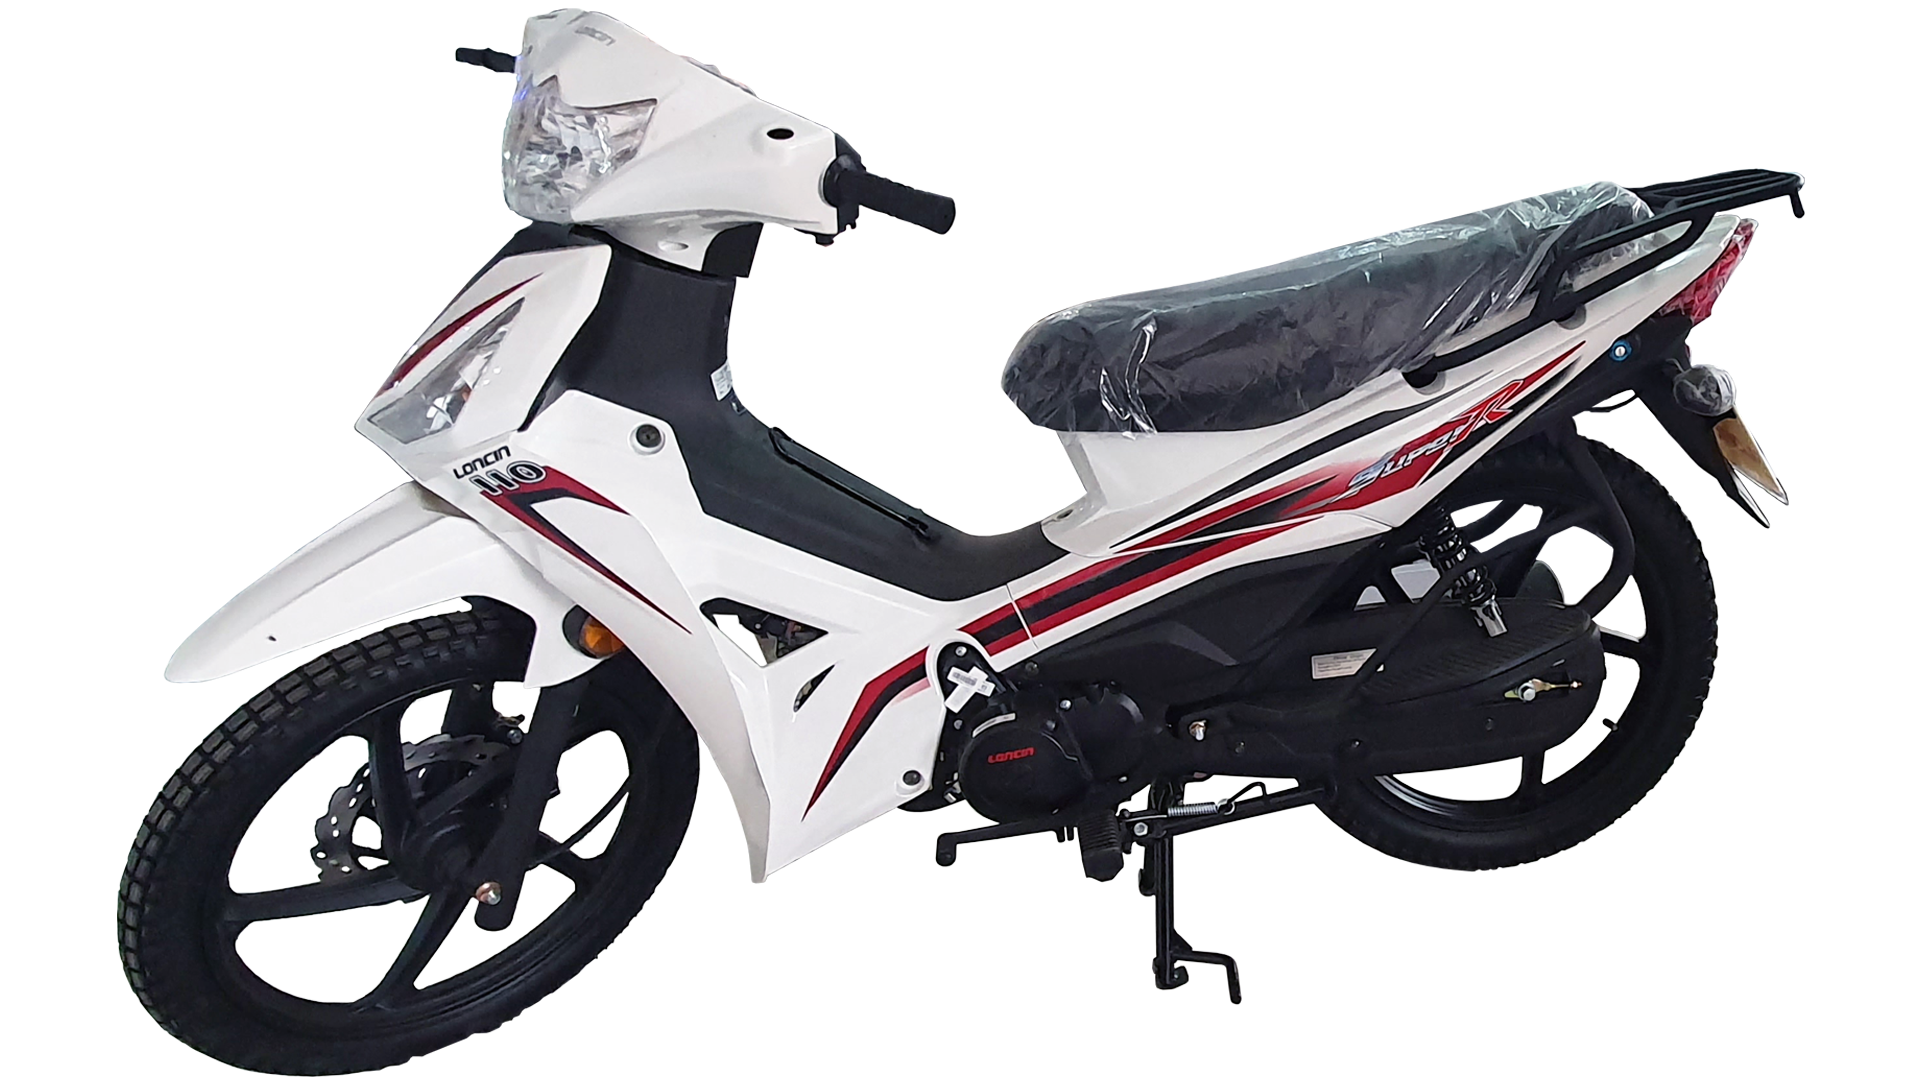 Motocycle LONCIN LX110-12A - 110cc - Electro Chaabani vente electromenager